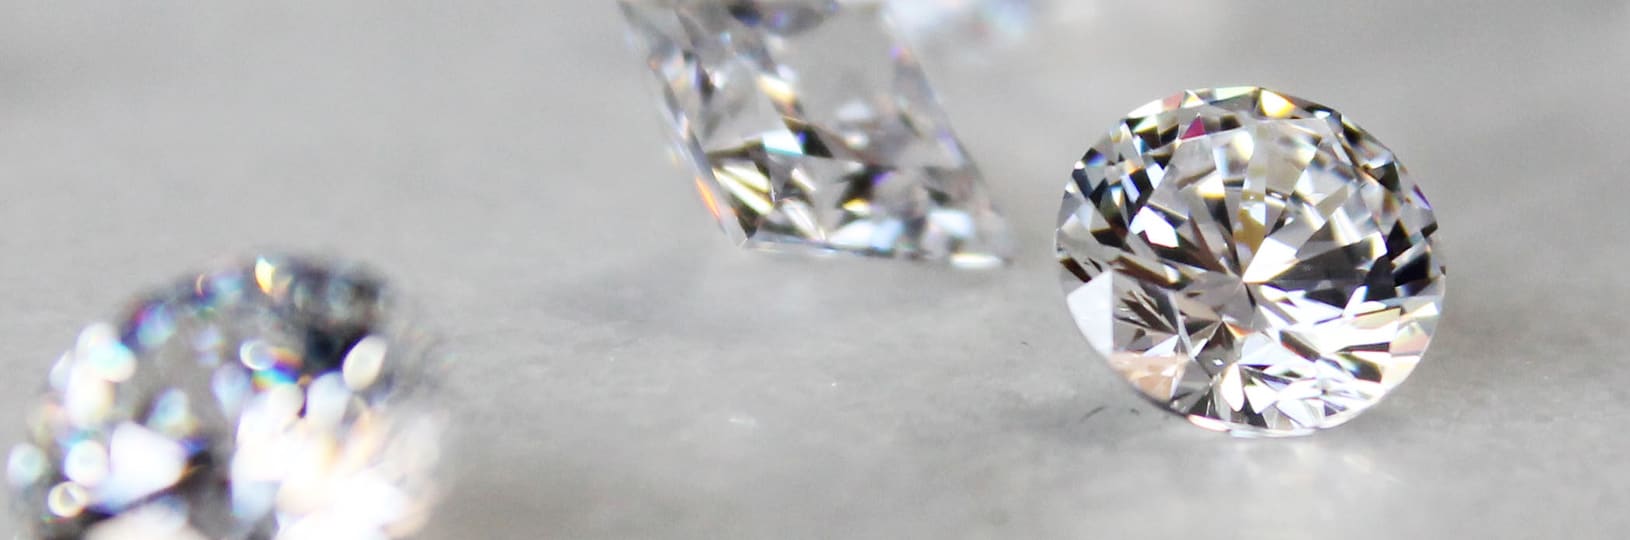 A close up image of lab grown diamonds